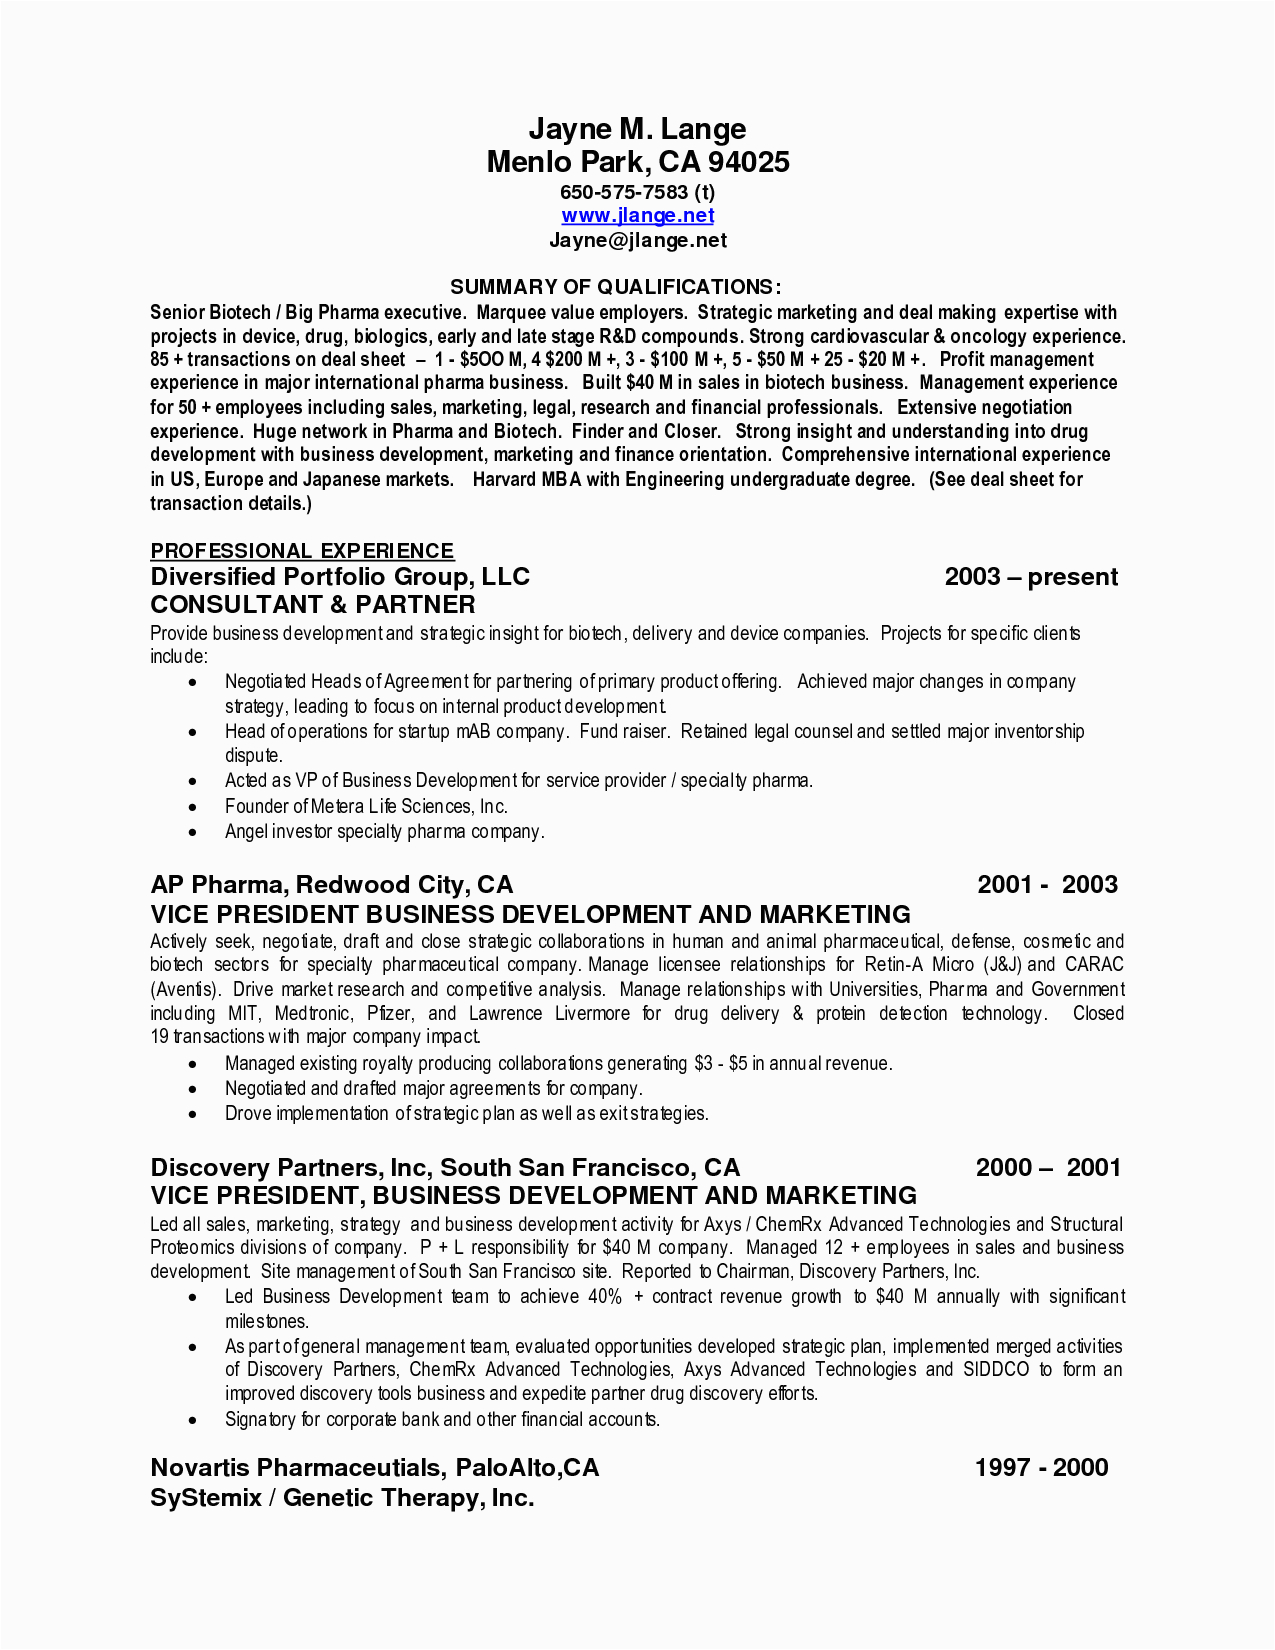 Sample Professional Resume Summary Of Qualifications Best Summary Of Qualifications Resume for 2016